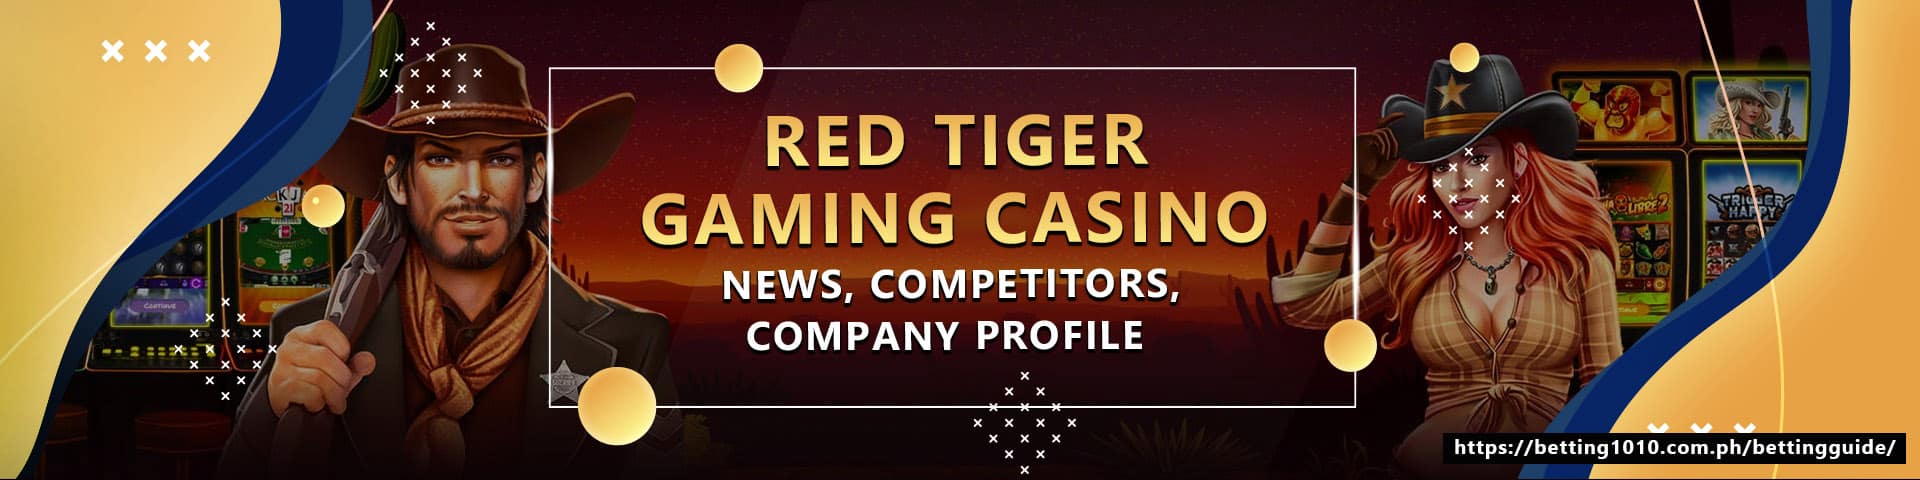 Red Tiger Gaming Casino News, Competitors, Company Profile